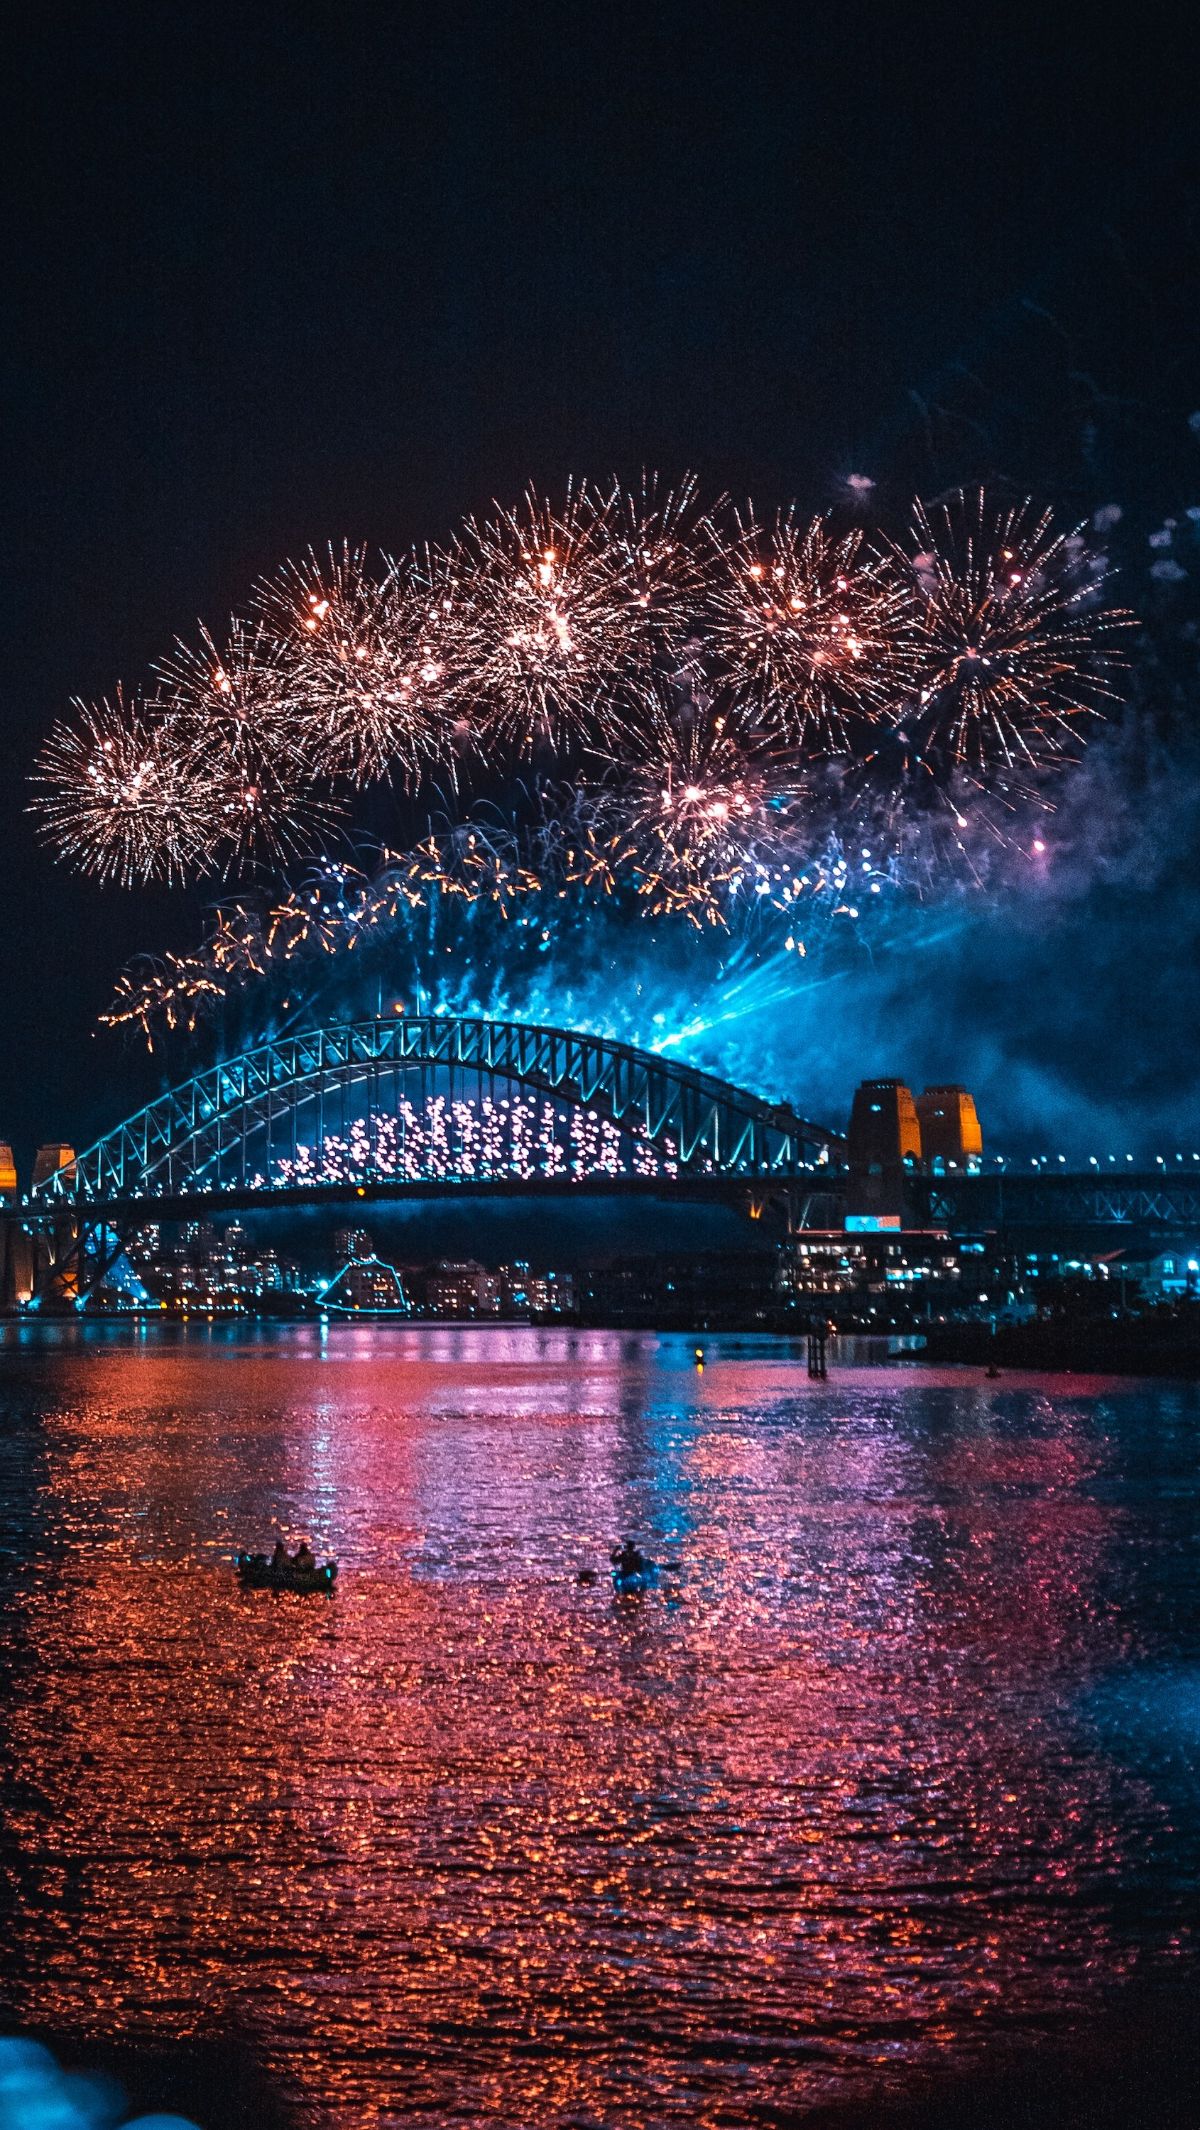 3. New Year's Eve in Sydney Harbour, Australia